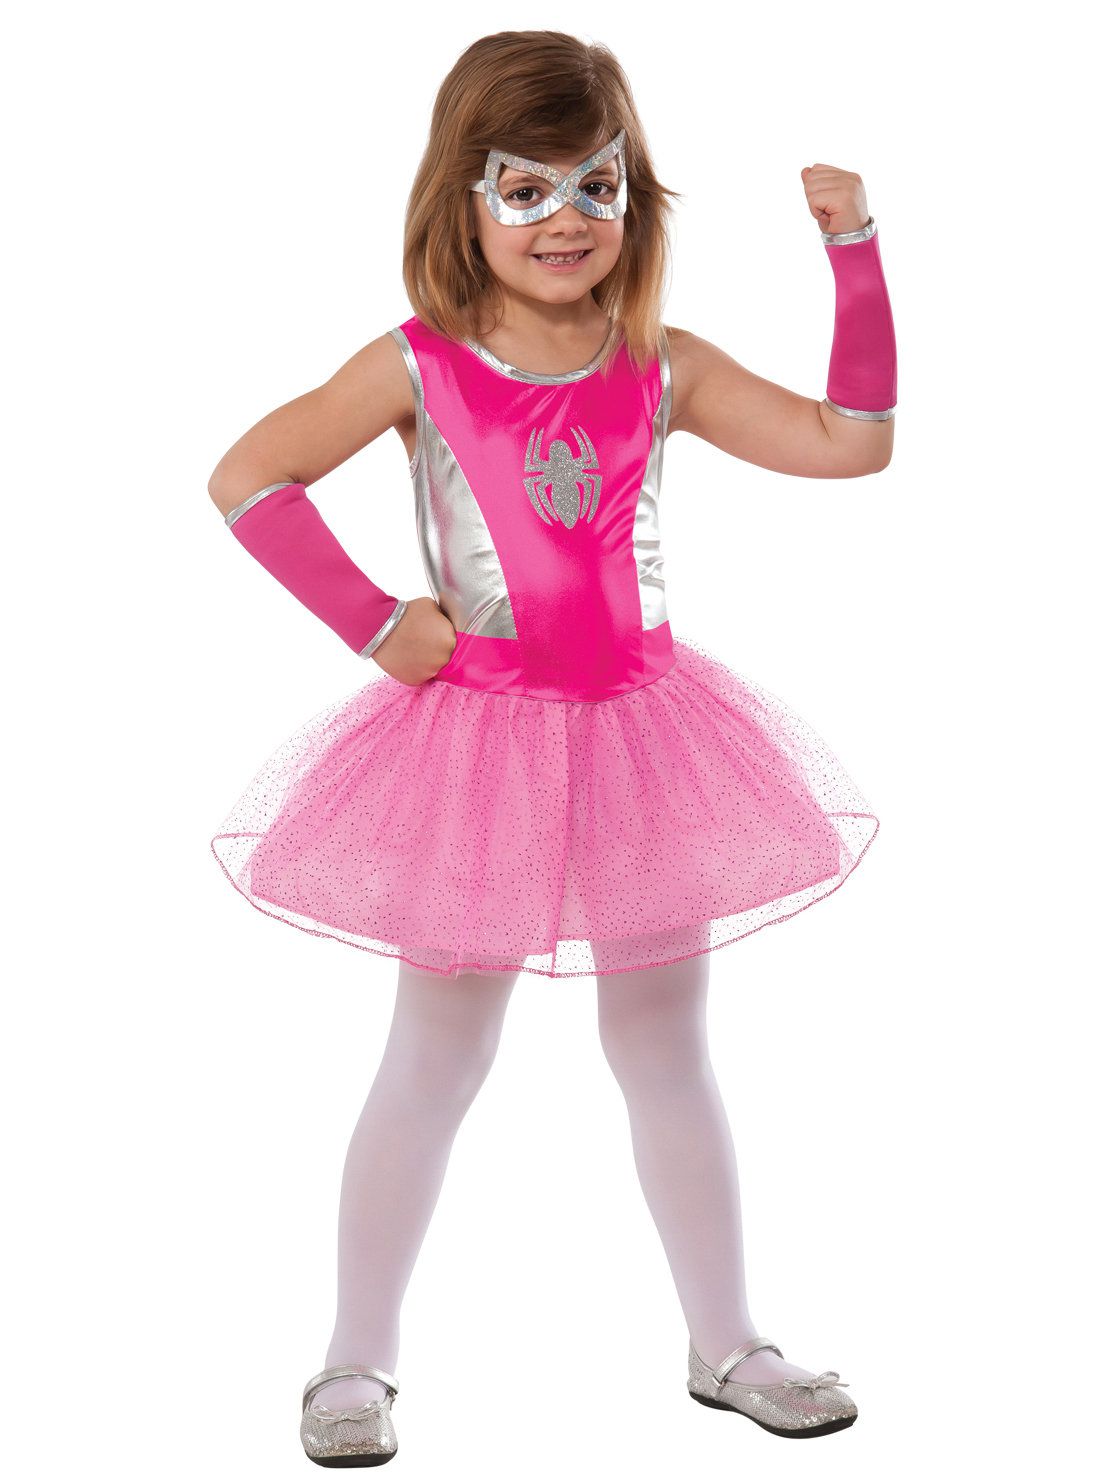 Marvel Spider-Girl Child Costume - costumes.com